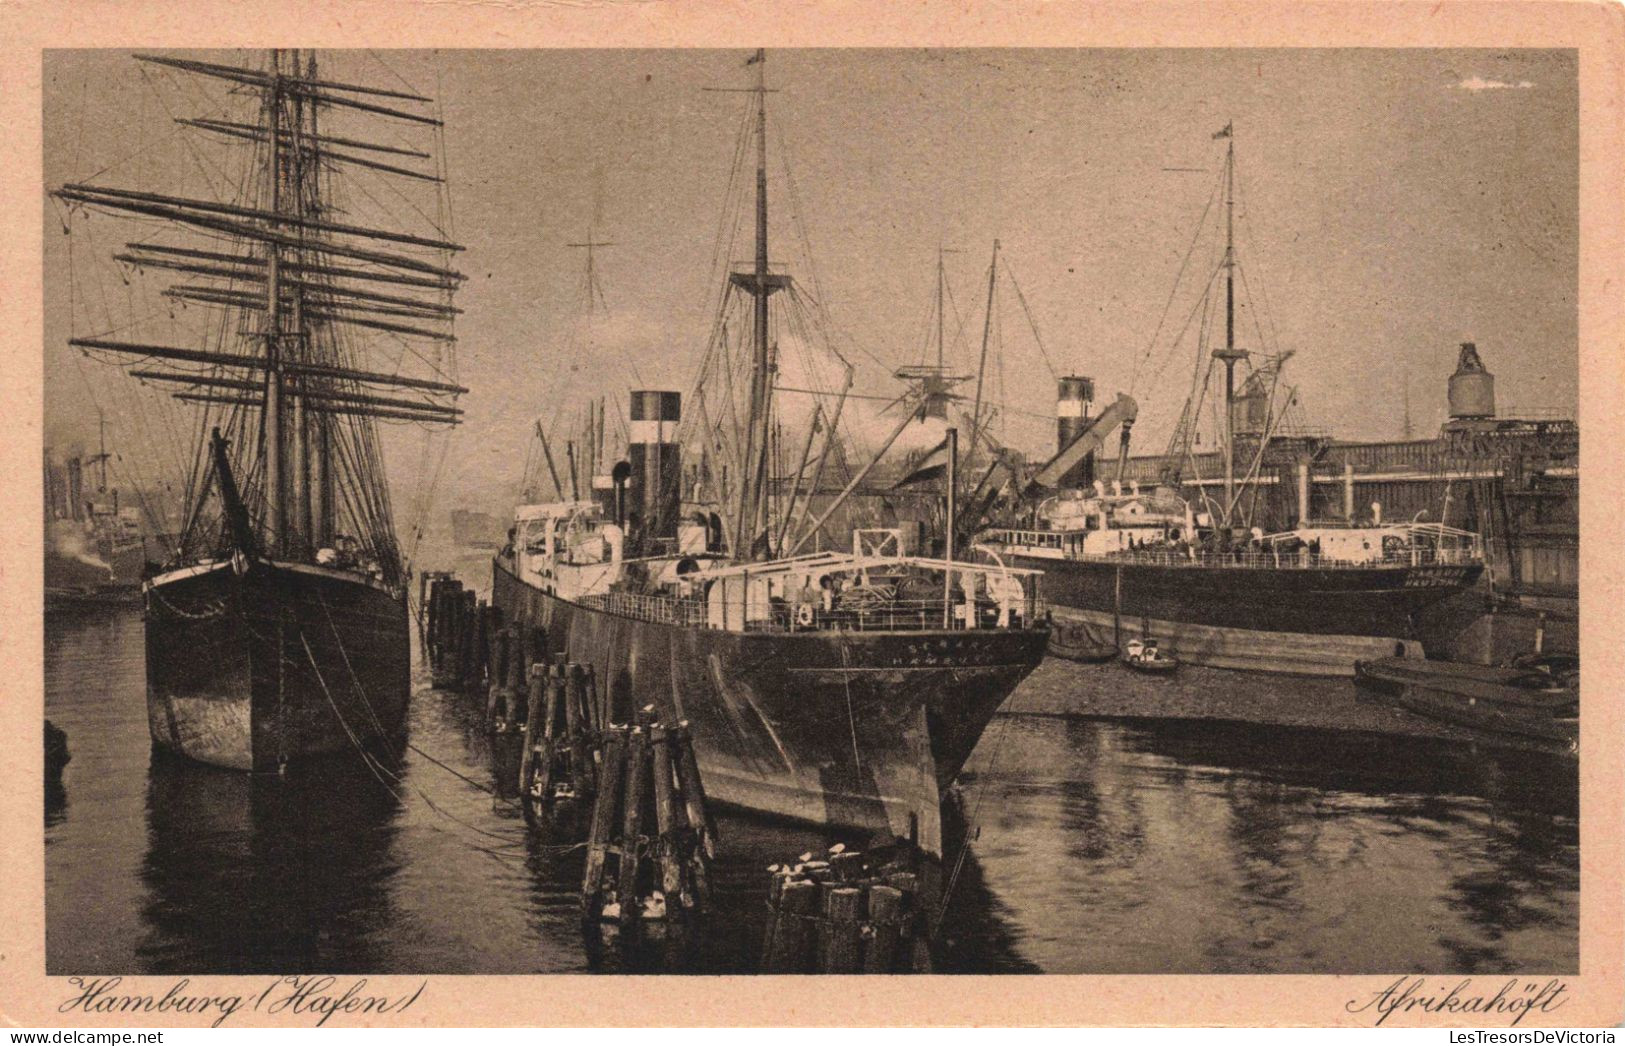 TRANSPORT - Bateaux - Hamburg Hafen - Carte Postale Ancienne - Cargos